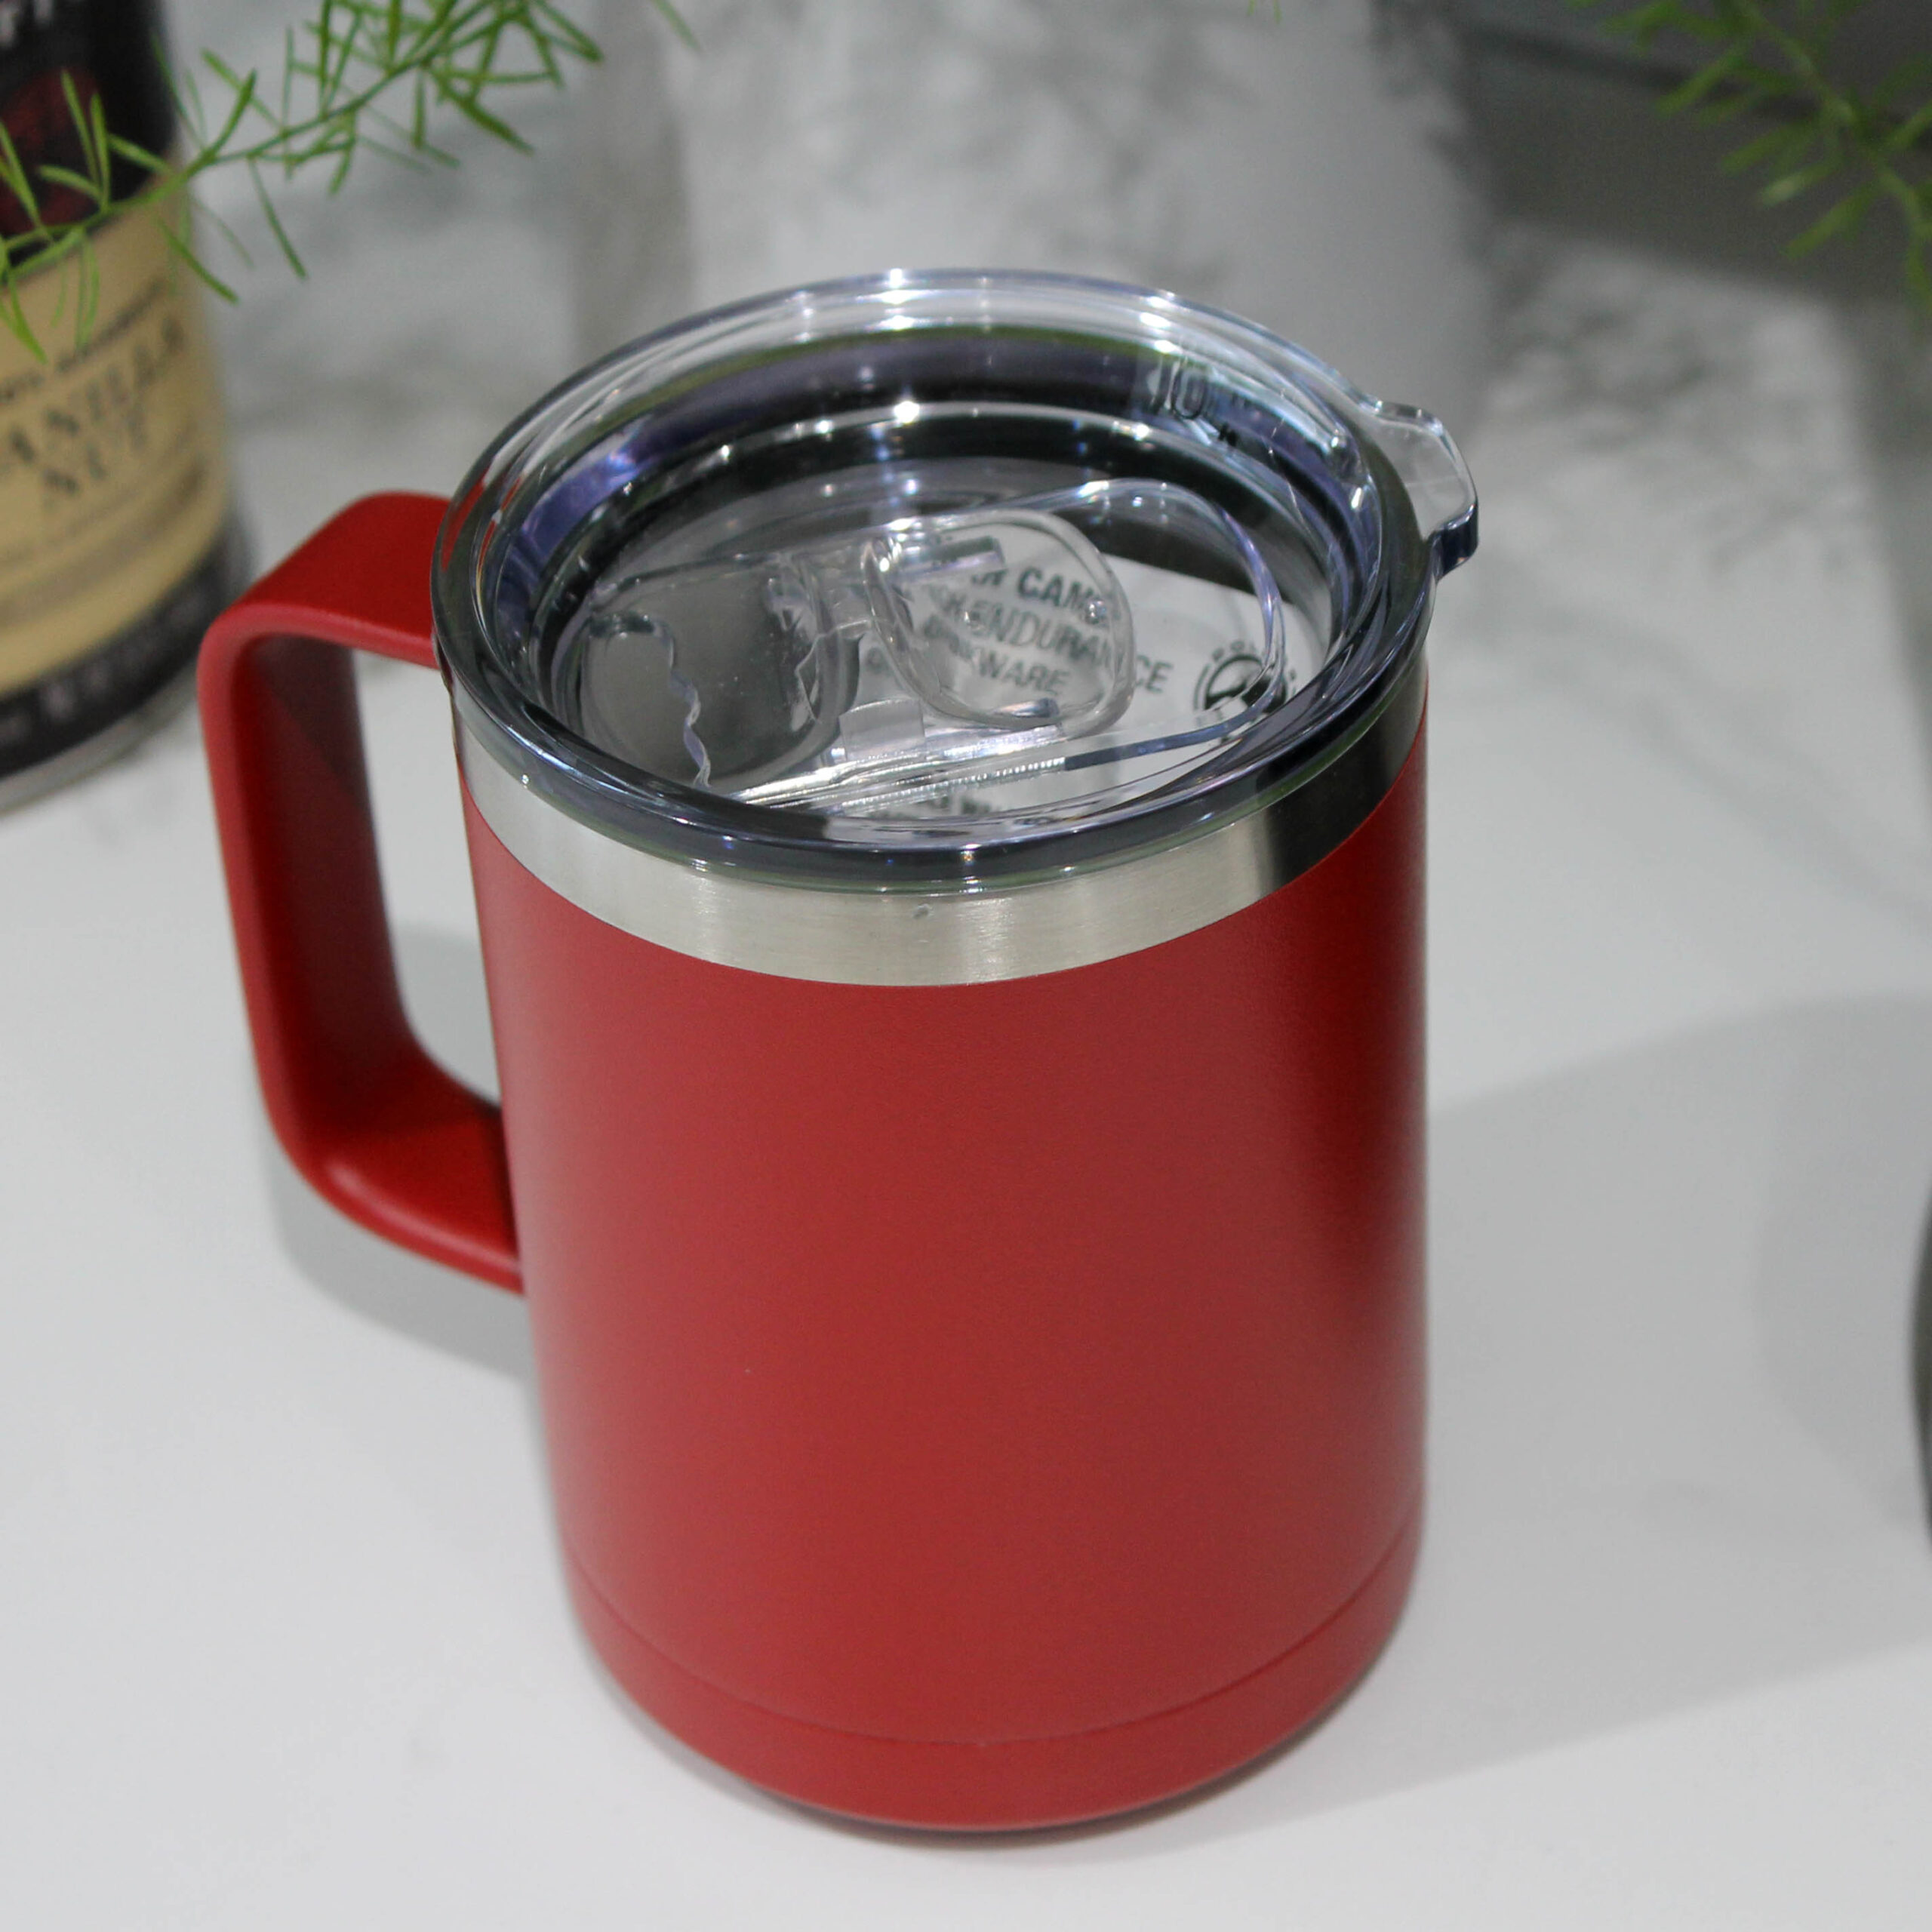 Full Name Monogram Red Travel Coffee Mug With Handle - Executive